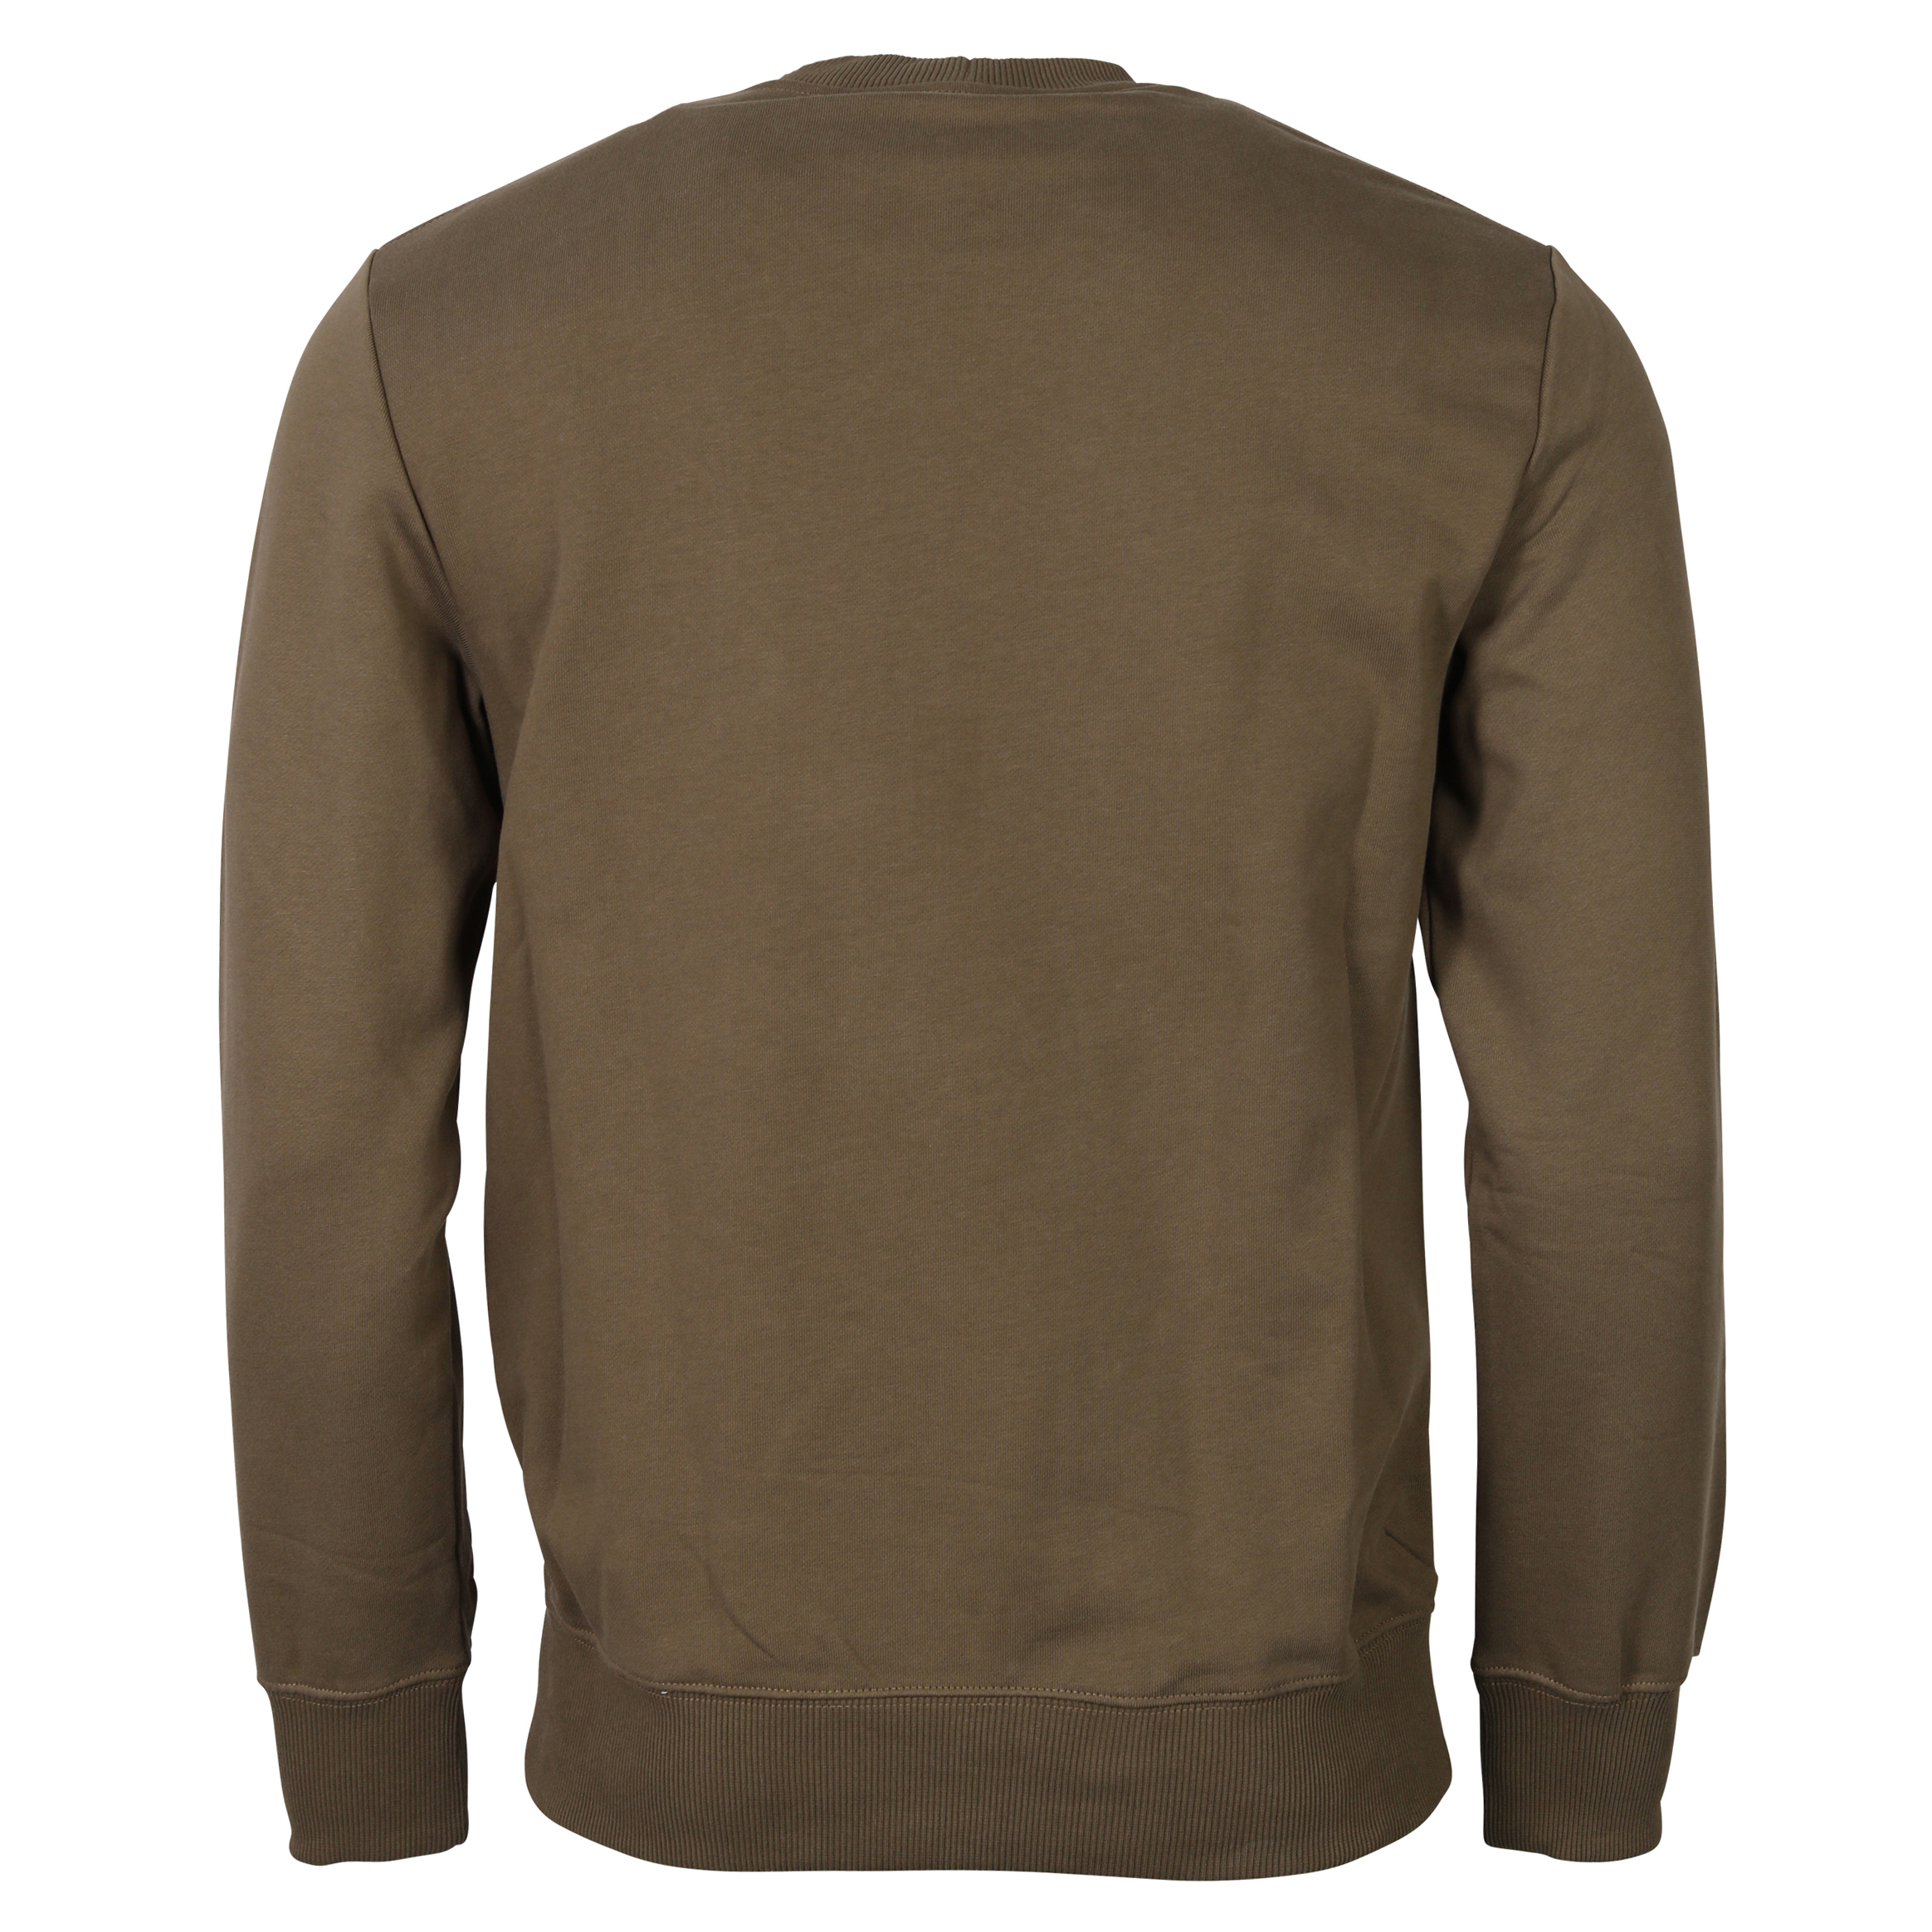 helmut lang sweater olive XL